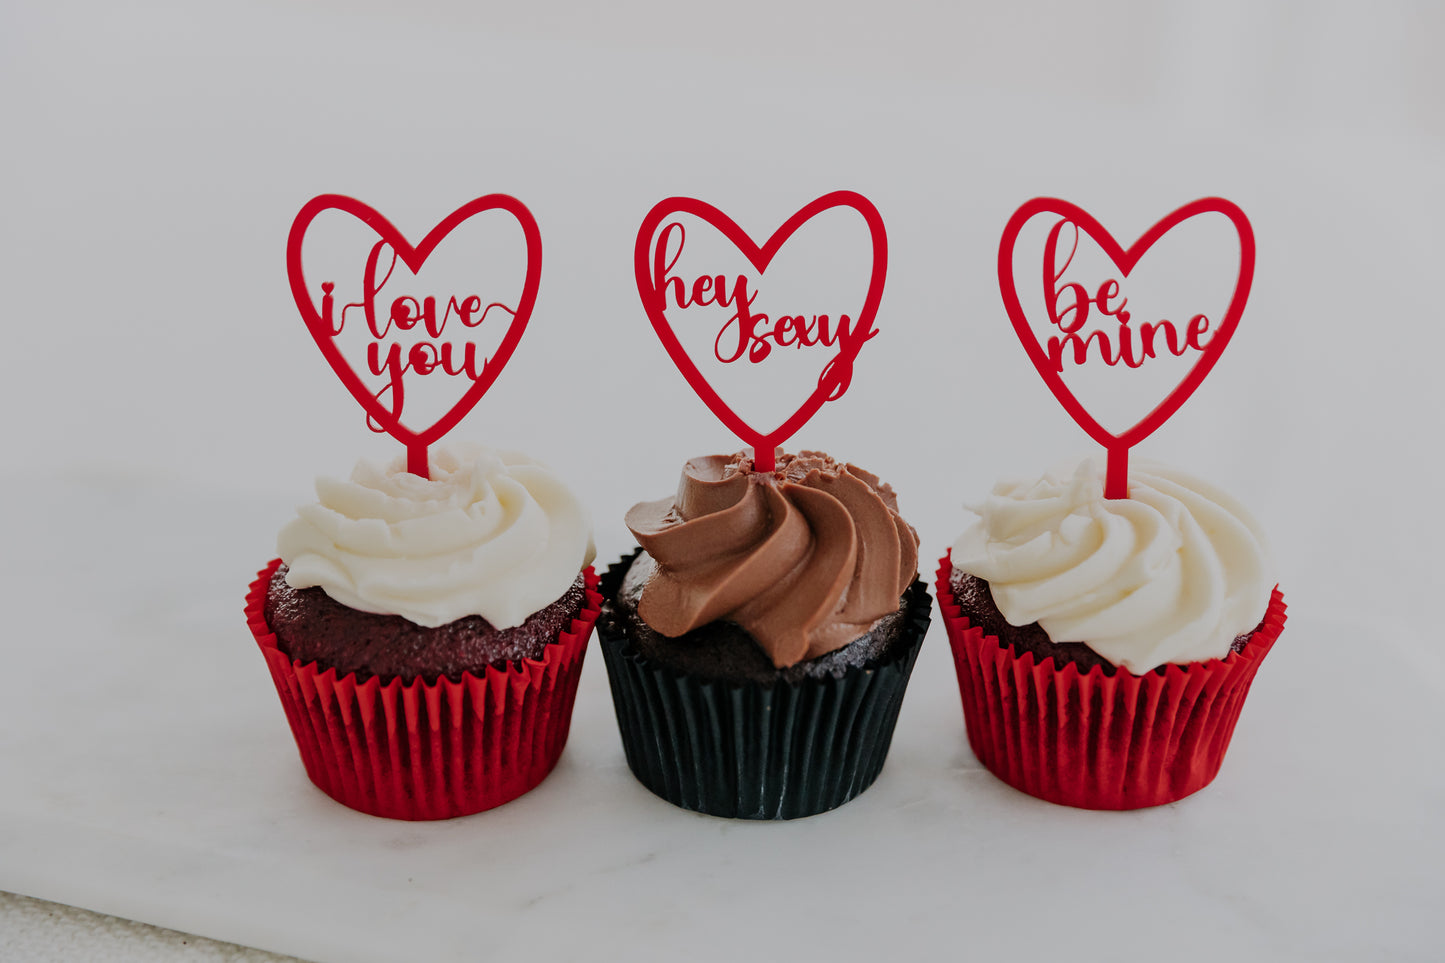 Valentine's Day Mini Cake Topper - "hey sexy"